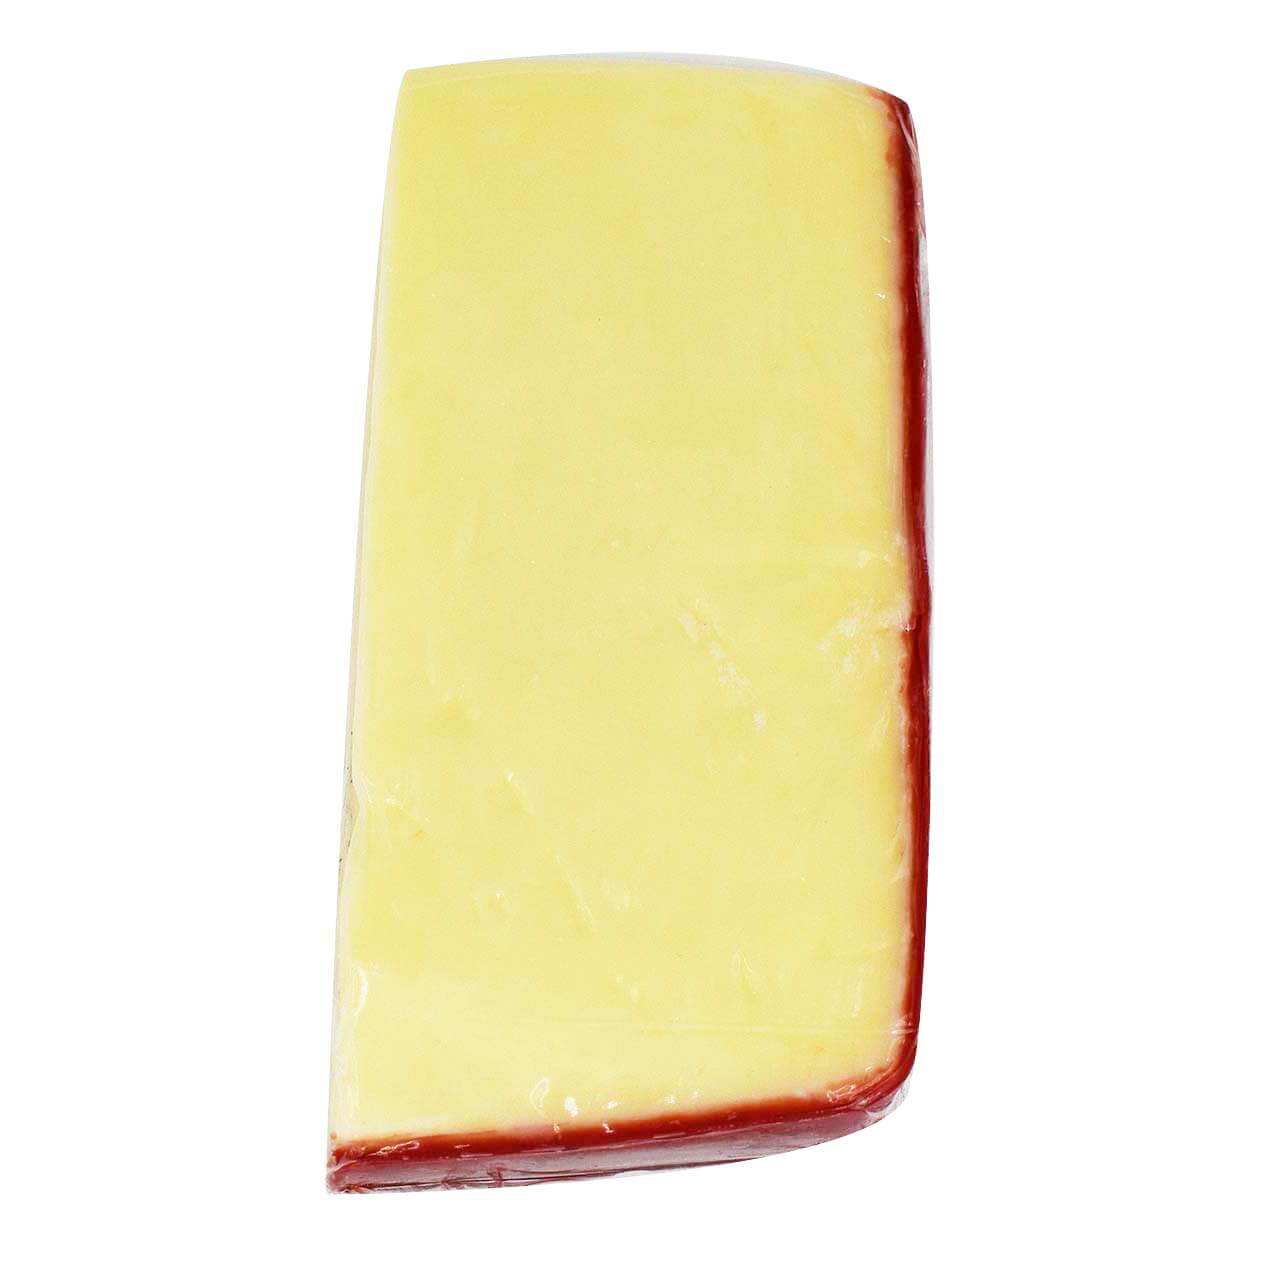 Weis Cheddar Cheese - 1 Year Aged